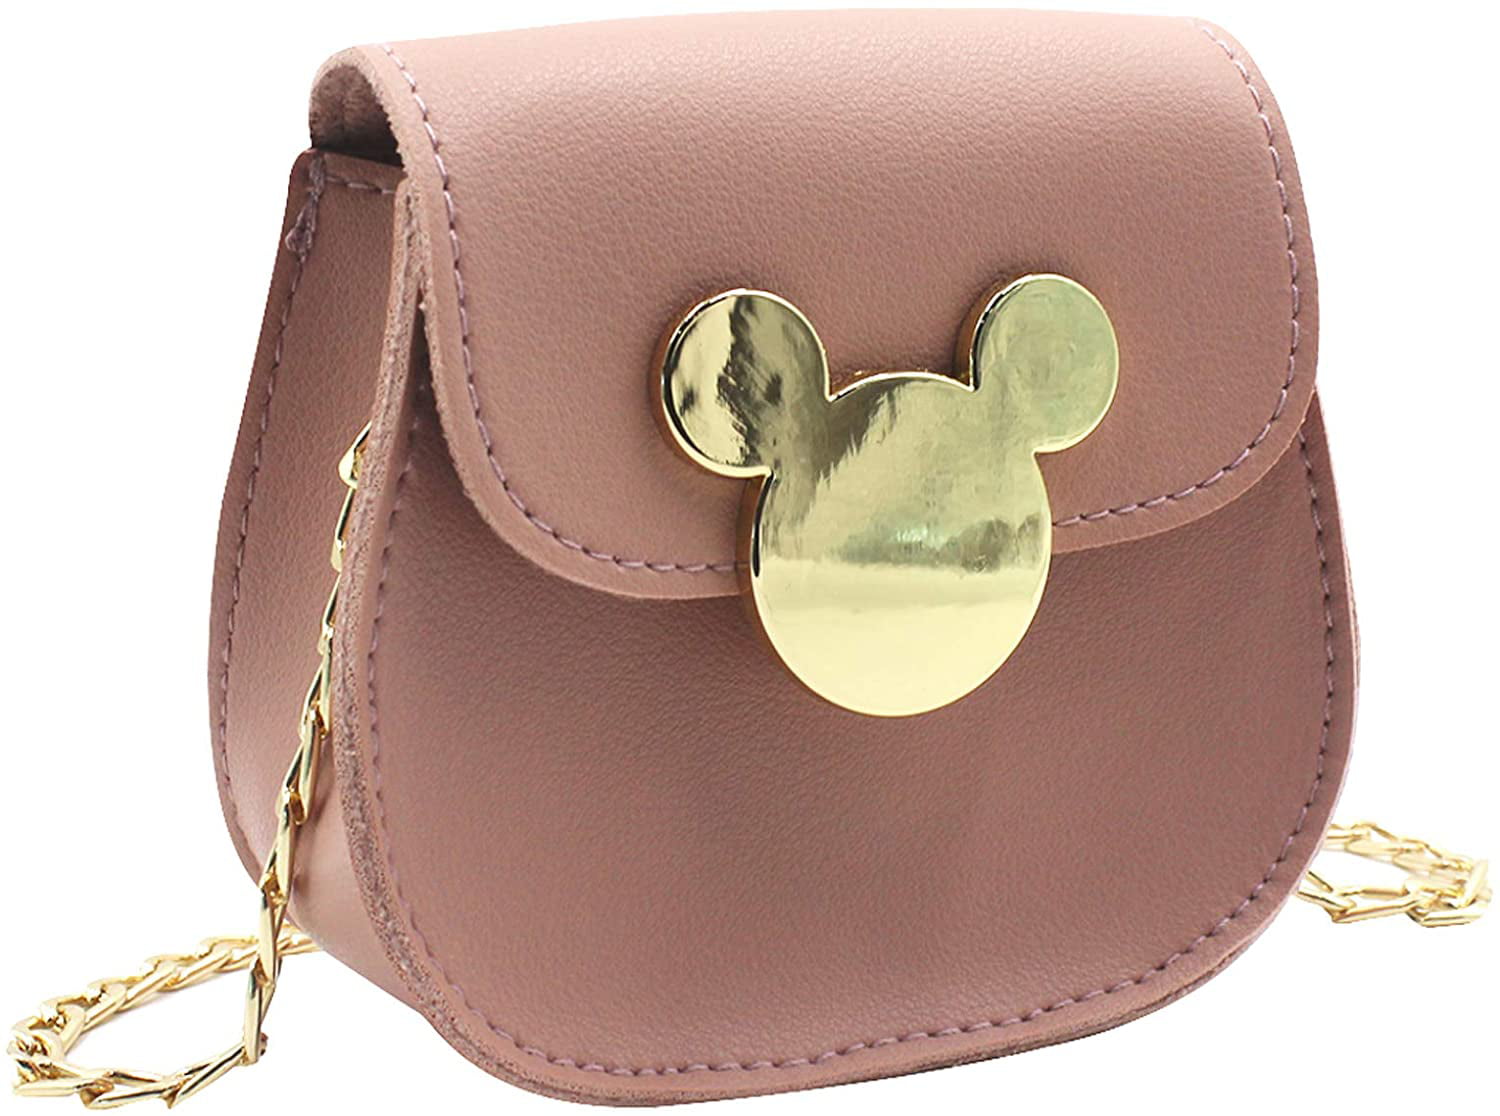 little girls purse kids accessories children\u2019s purse purse for kids Minnie Fruit Mickey Fruit purse faux leather purse gift for girls